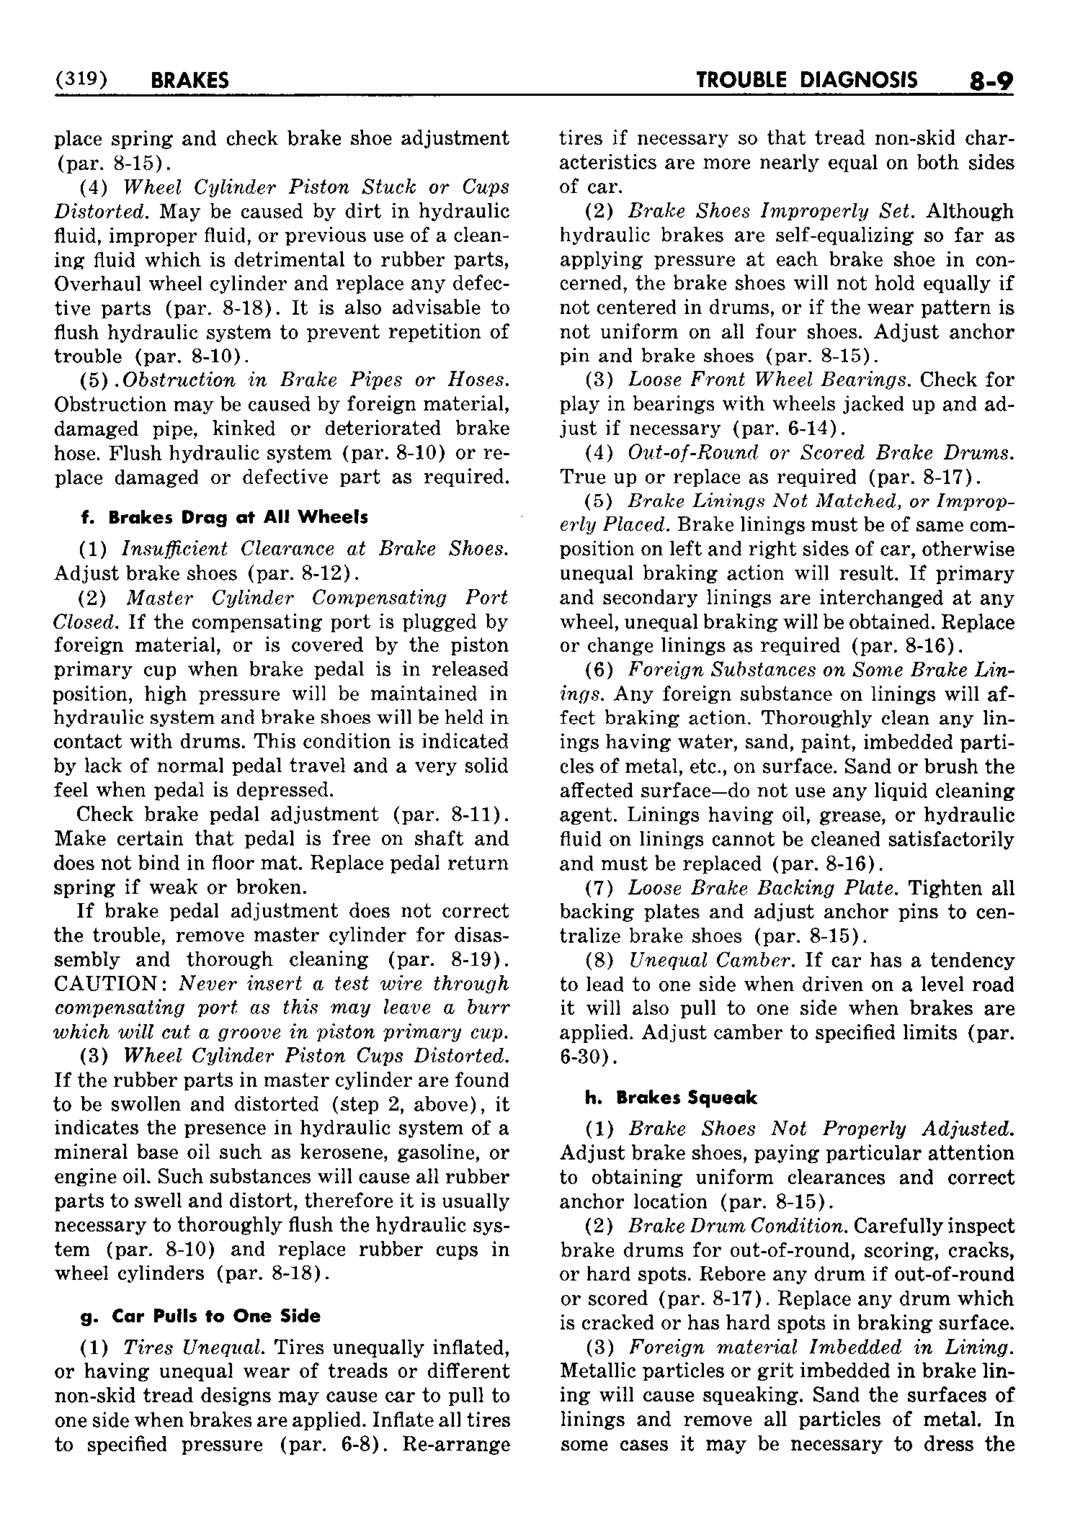 n_09 1952 Buick Shop Manual - Brakes-009-009.jpg